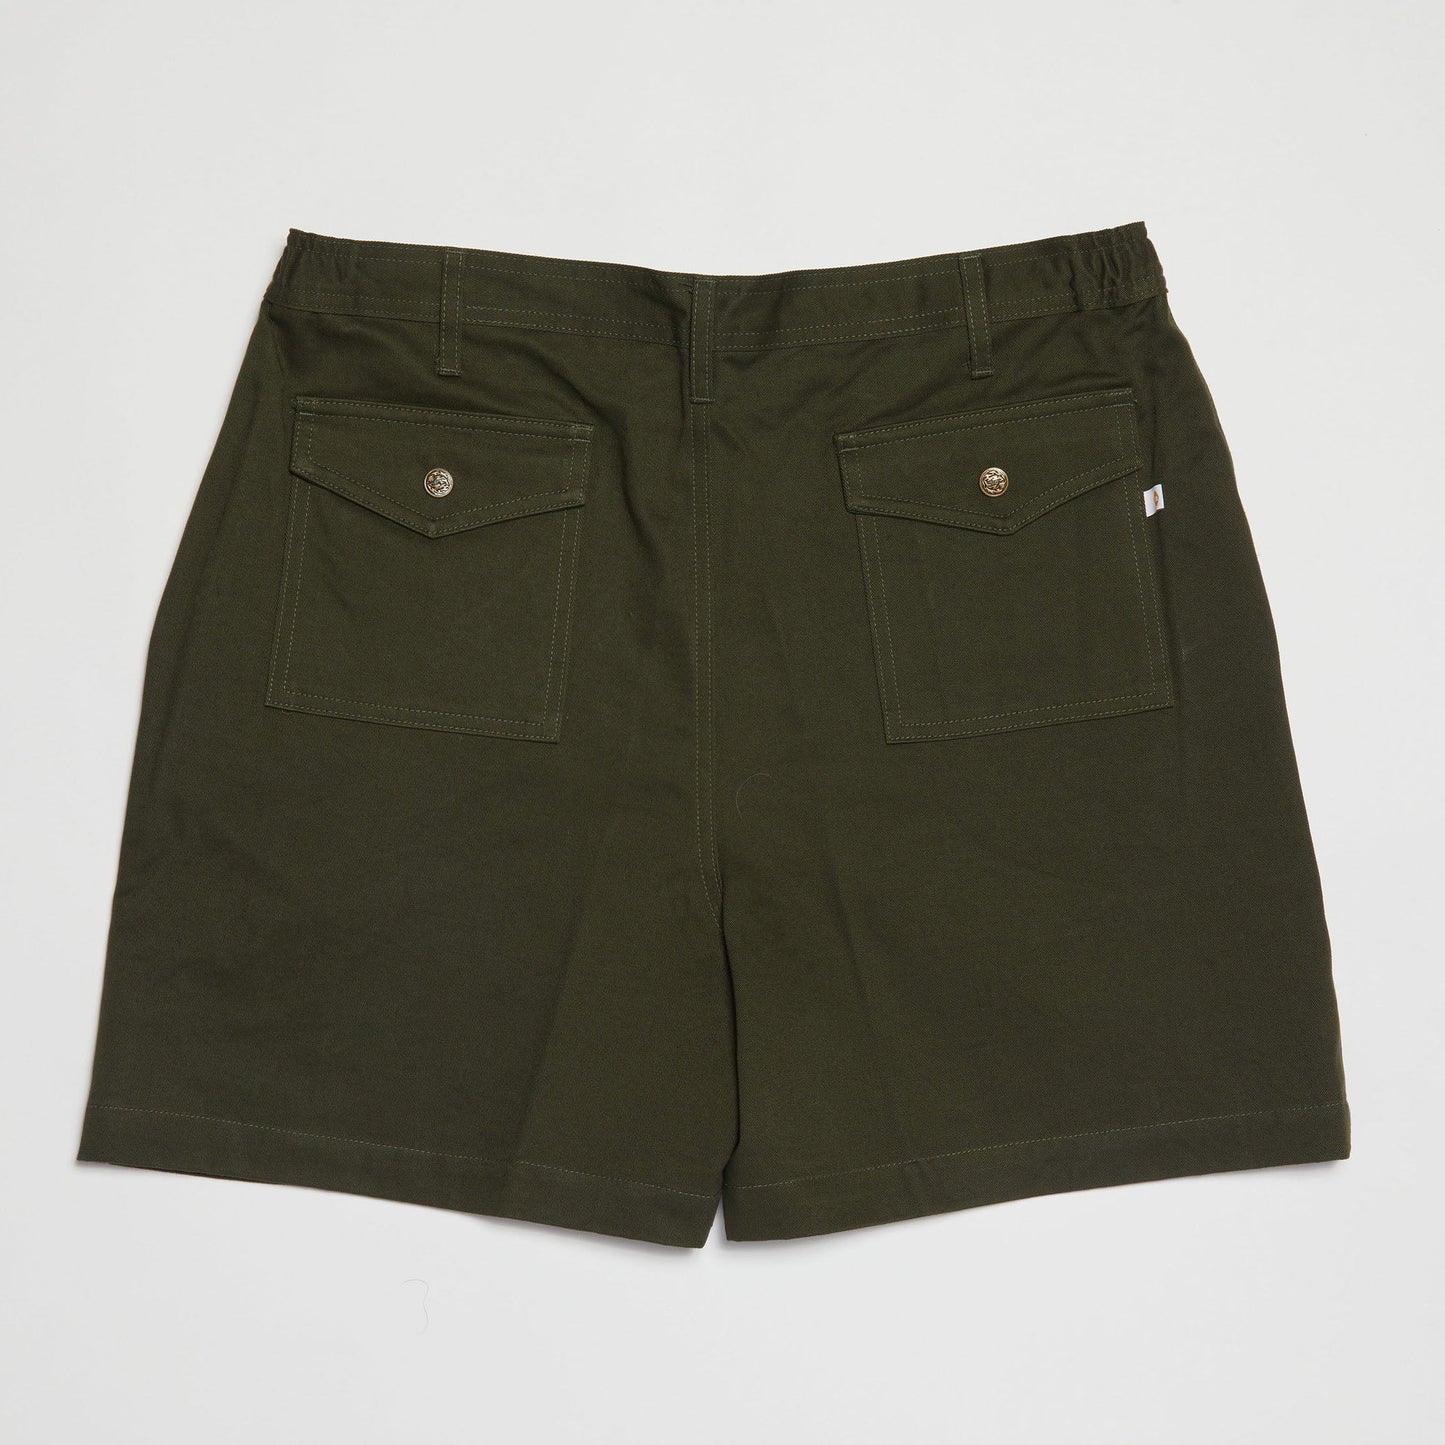 Boy Scout Shorts (OD Green)